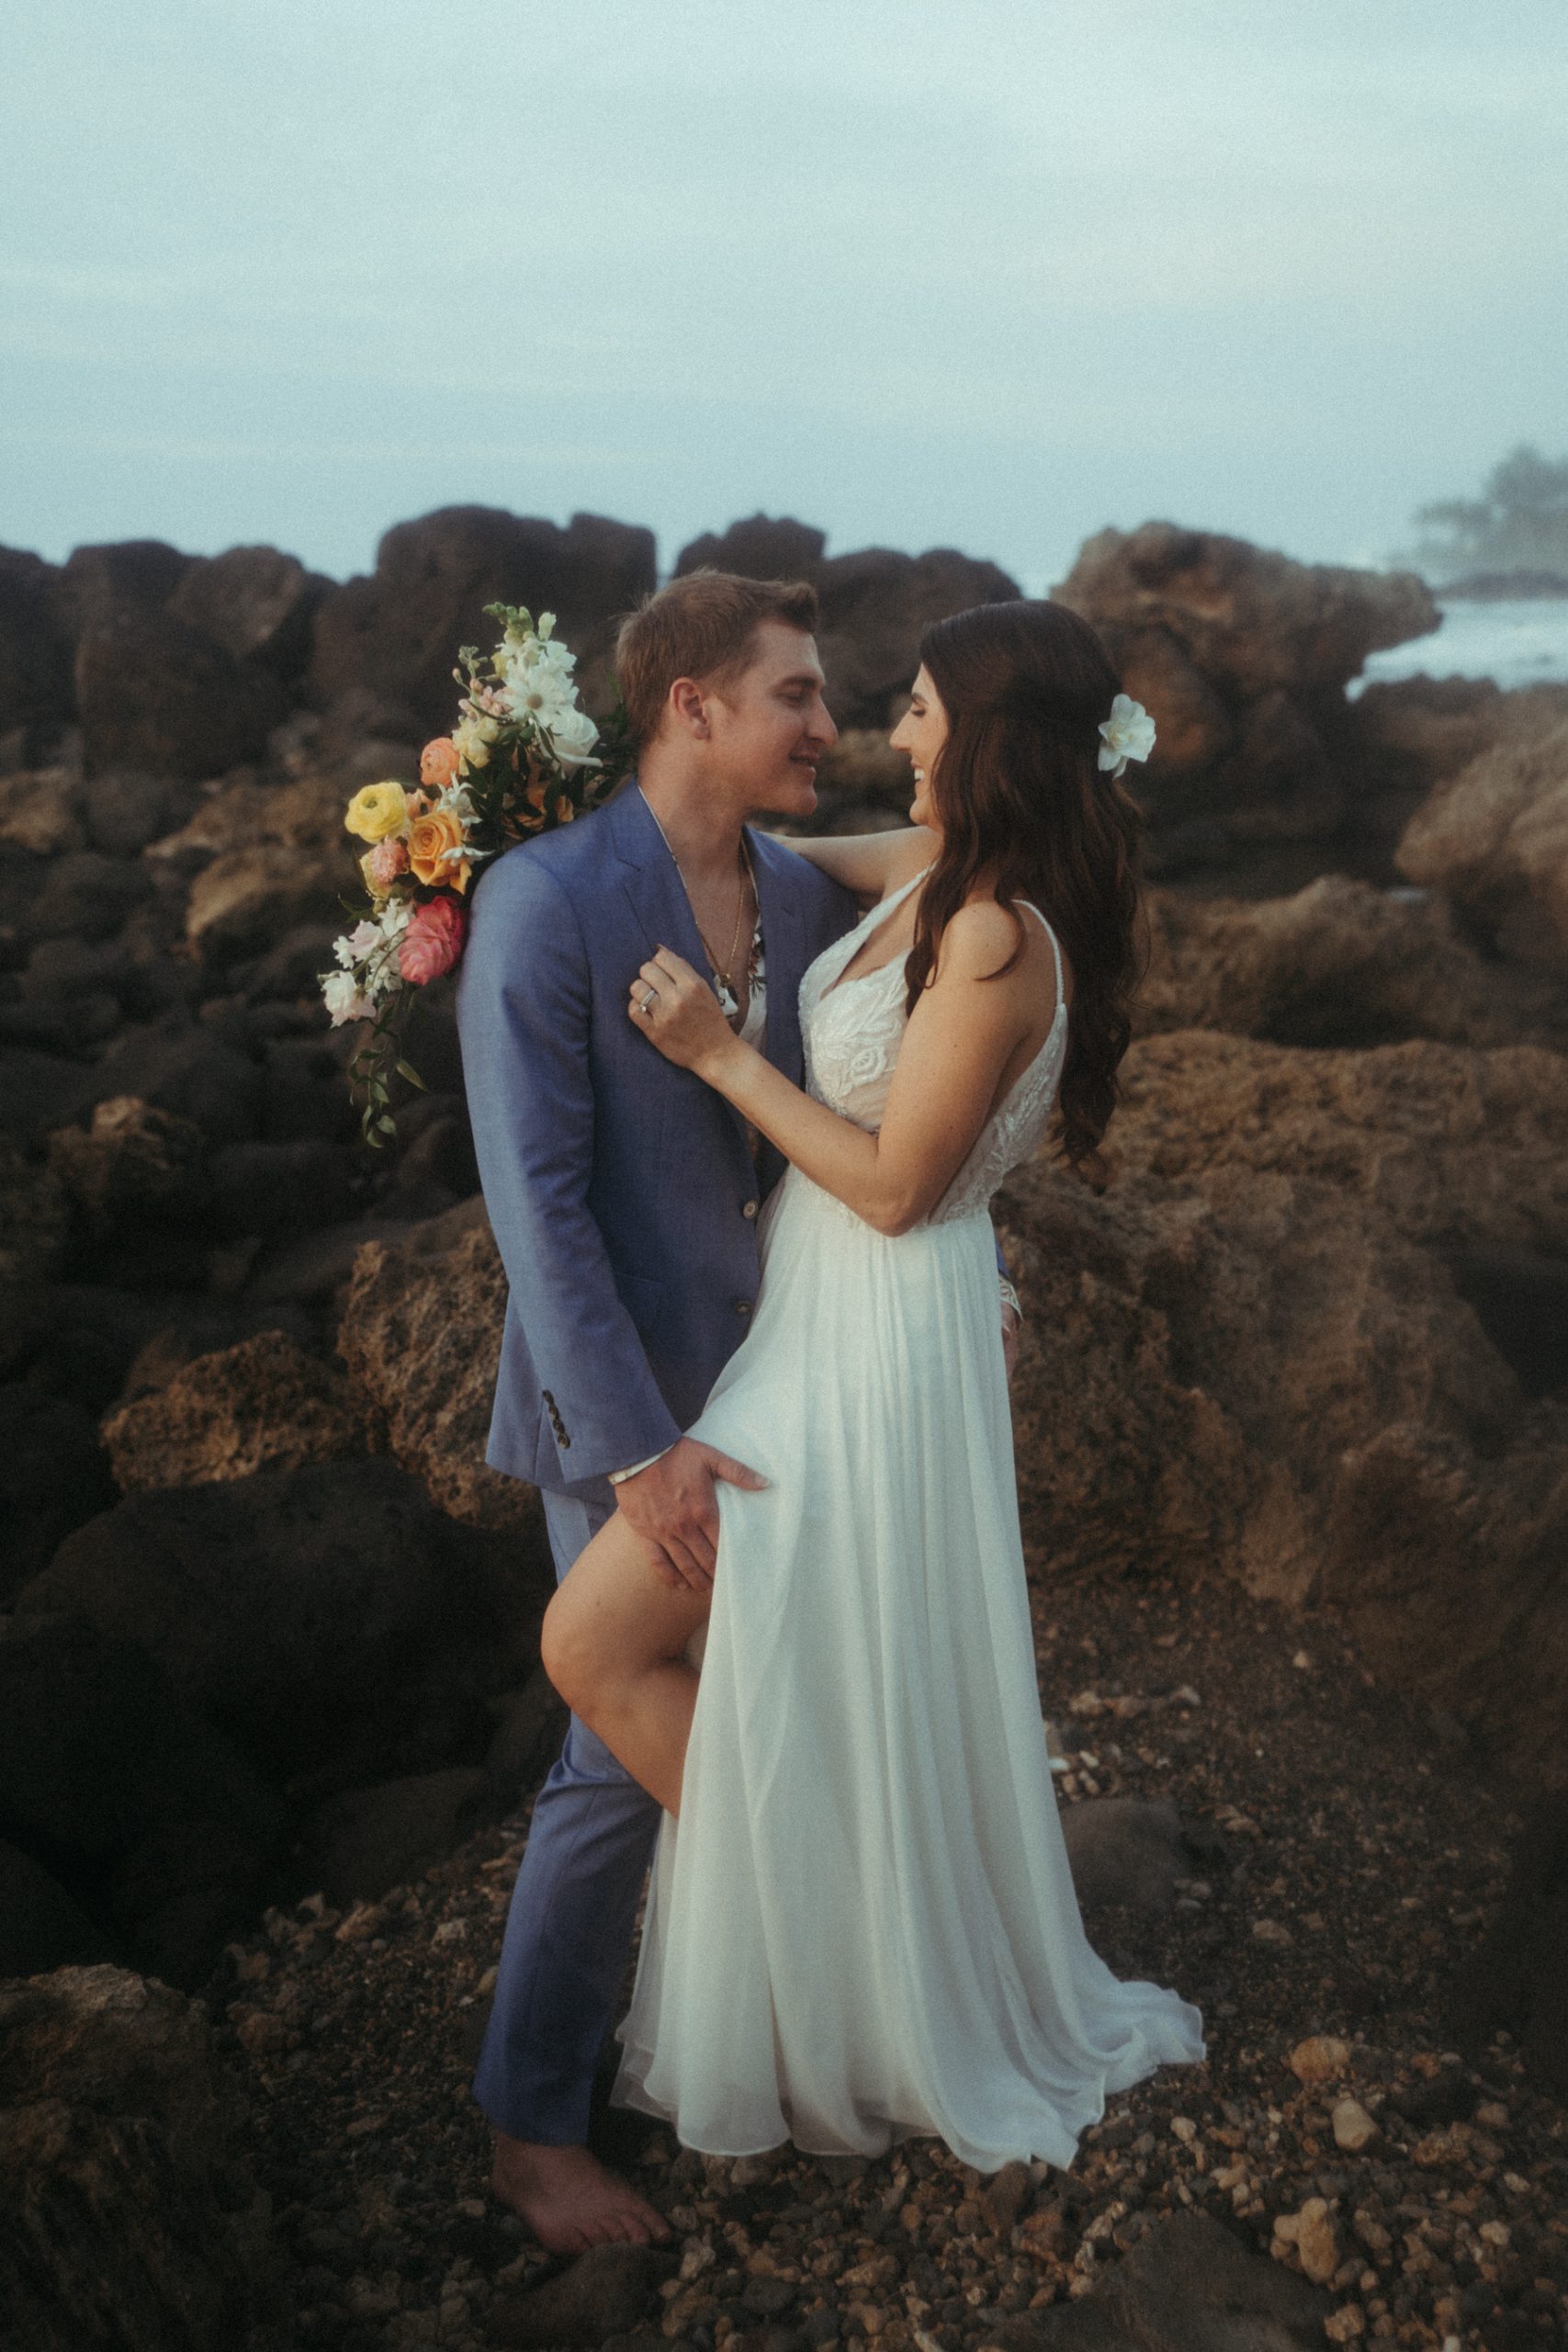 Intimate newlywed portraits on rocky beach on Oahu's North Shore captured by Masha Sakhno Photo.